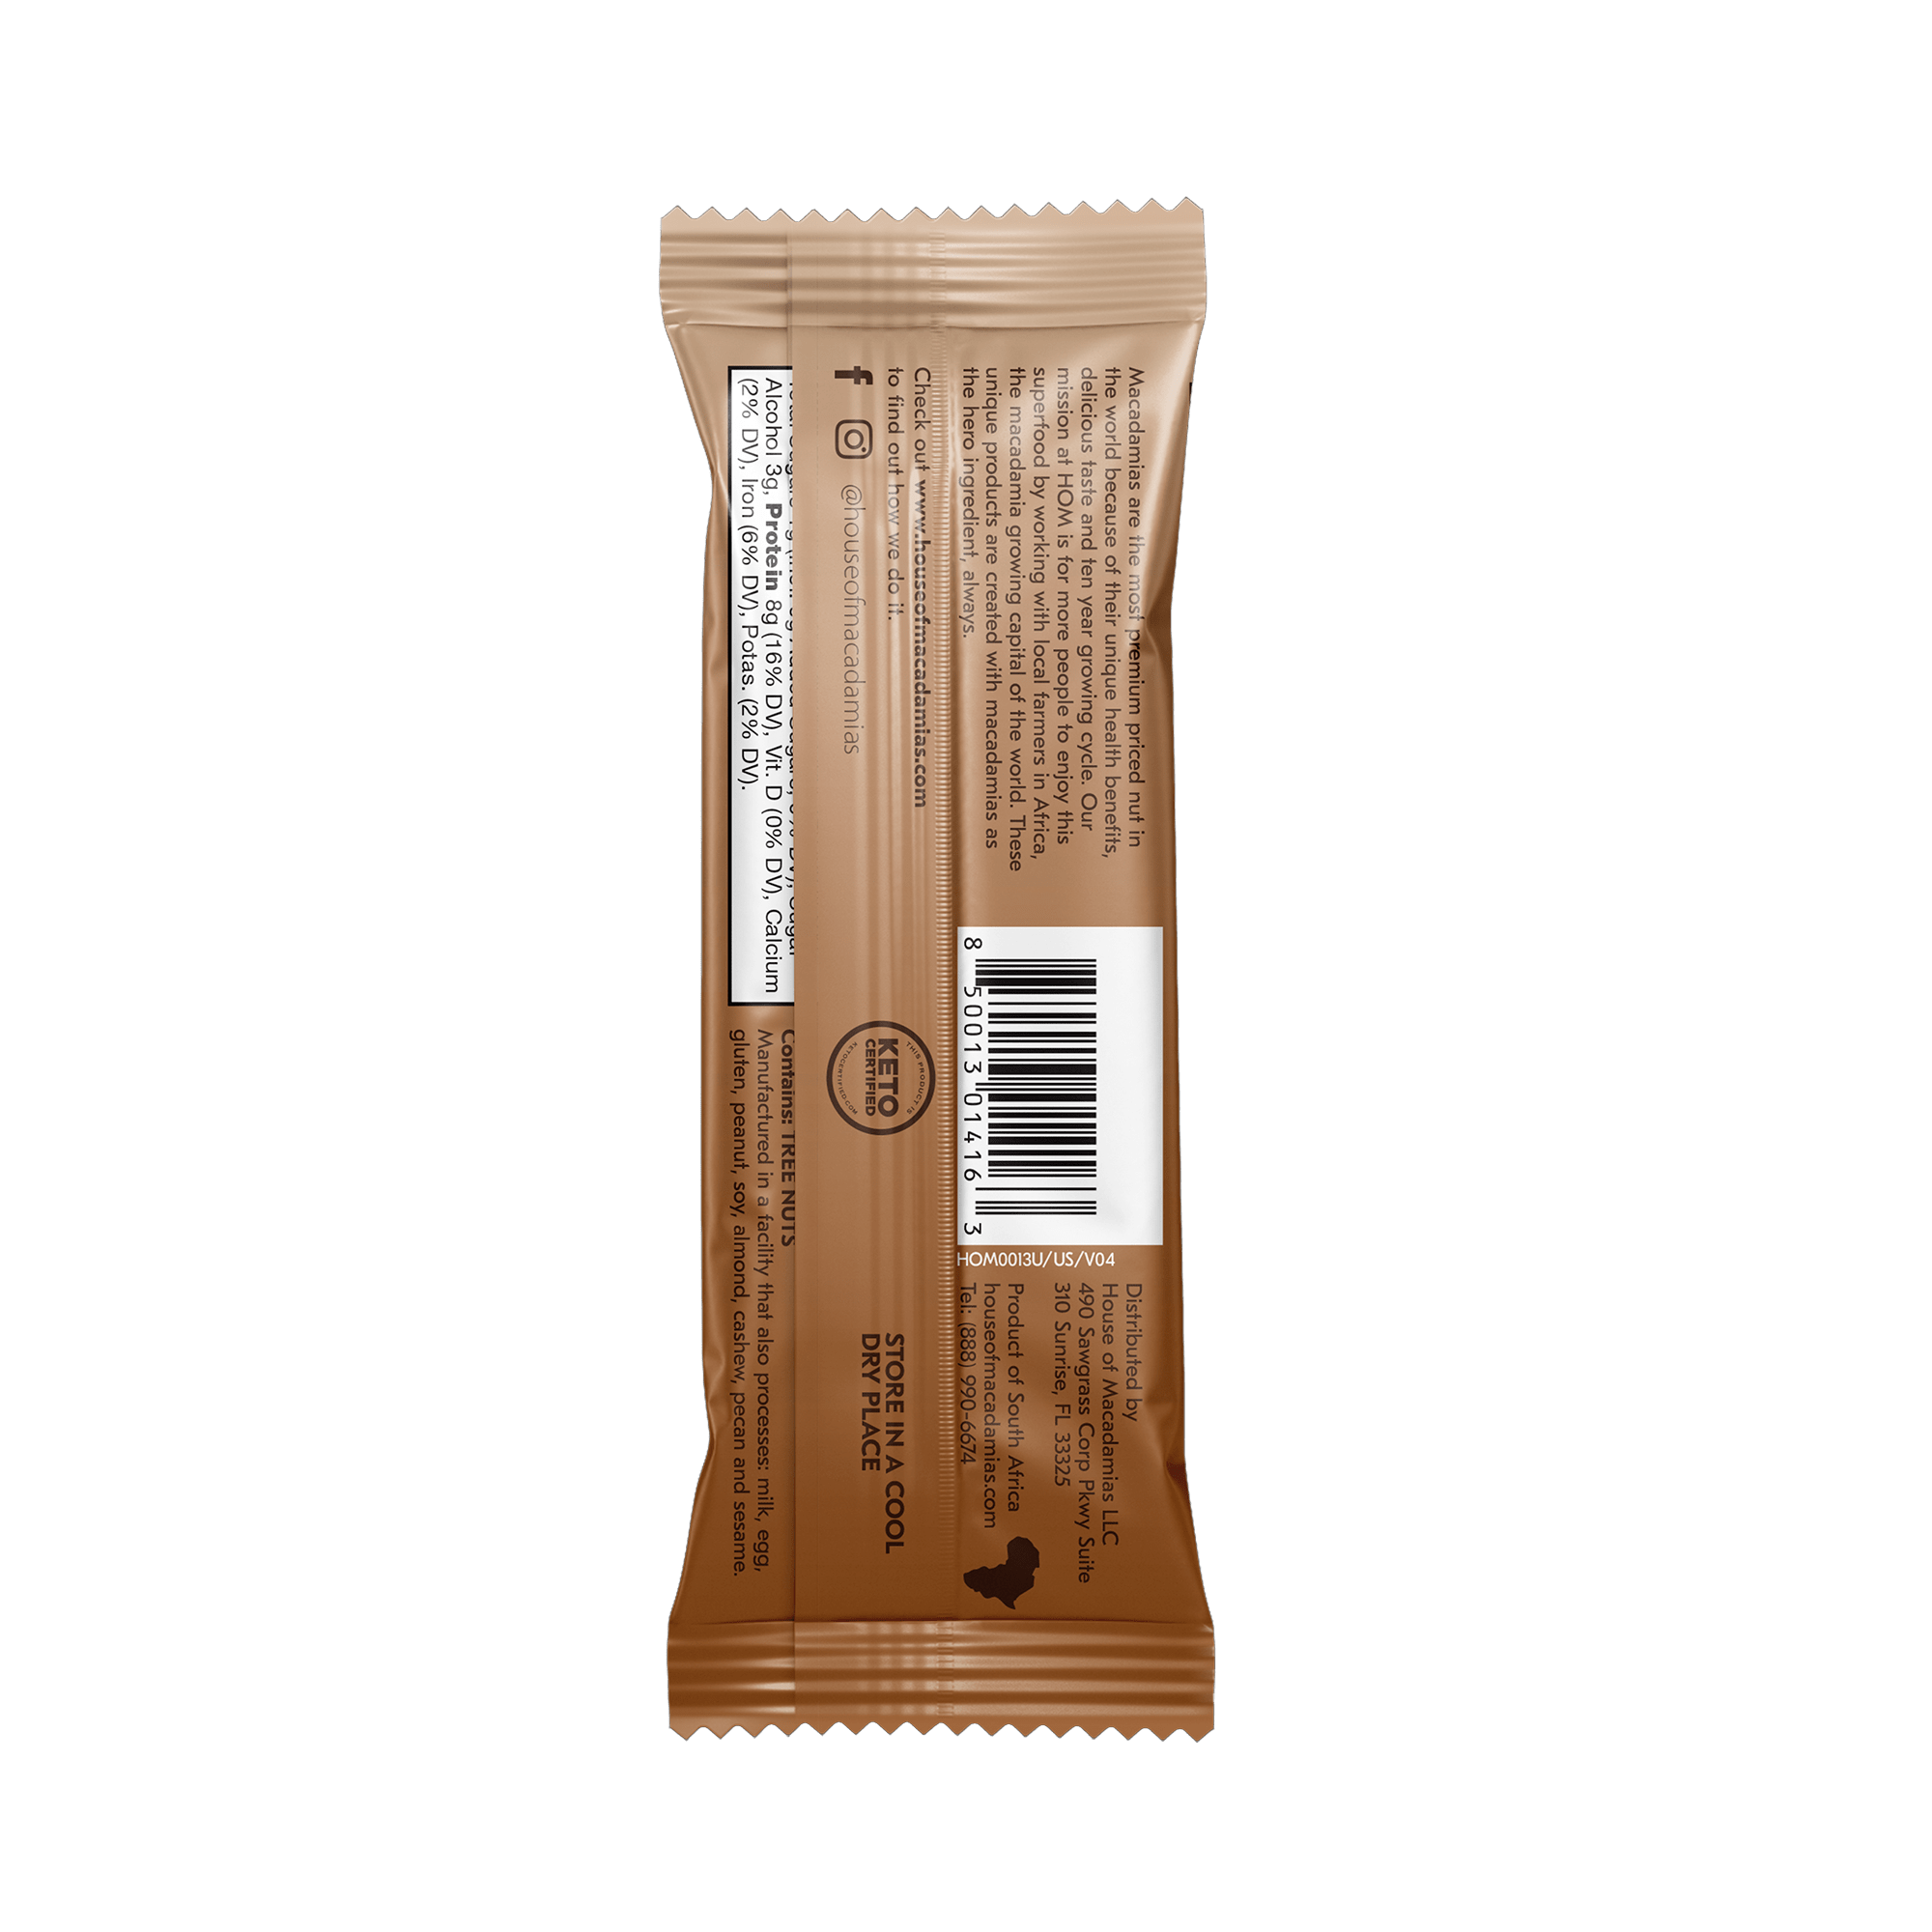 Dark Chocolate Macadamia Protein Bars (12 Bars) - House of Macadamias - quick snacks